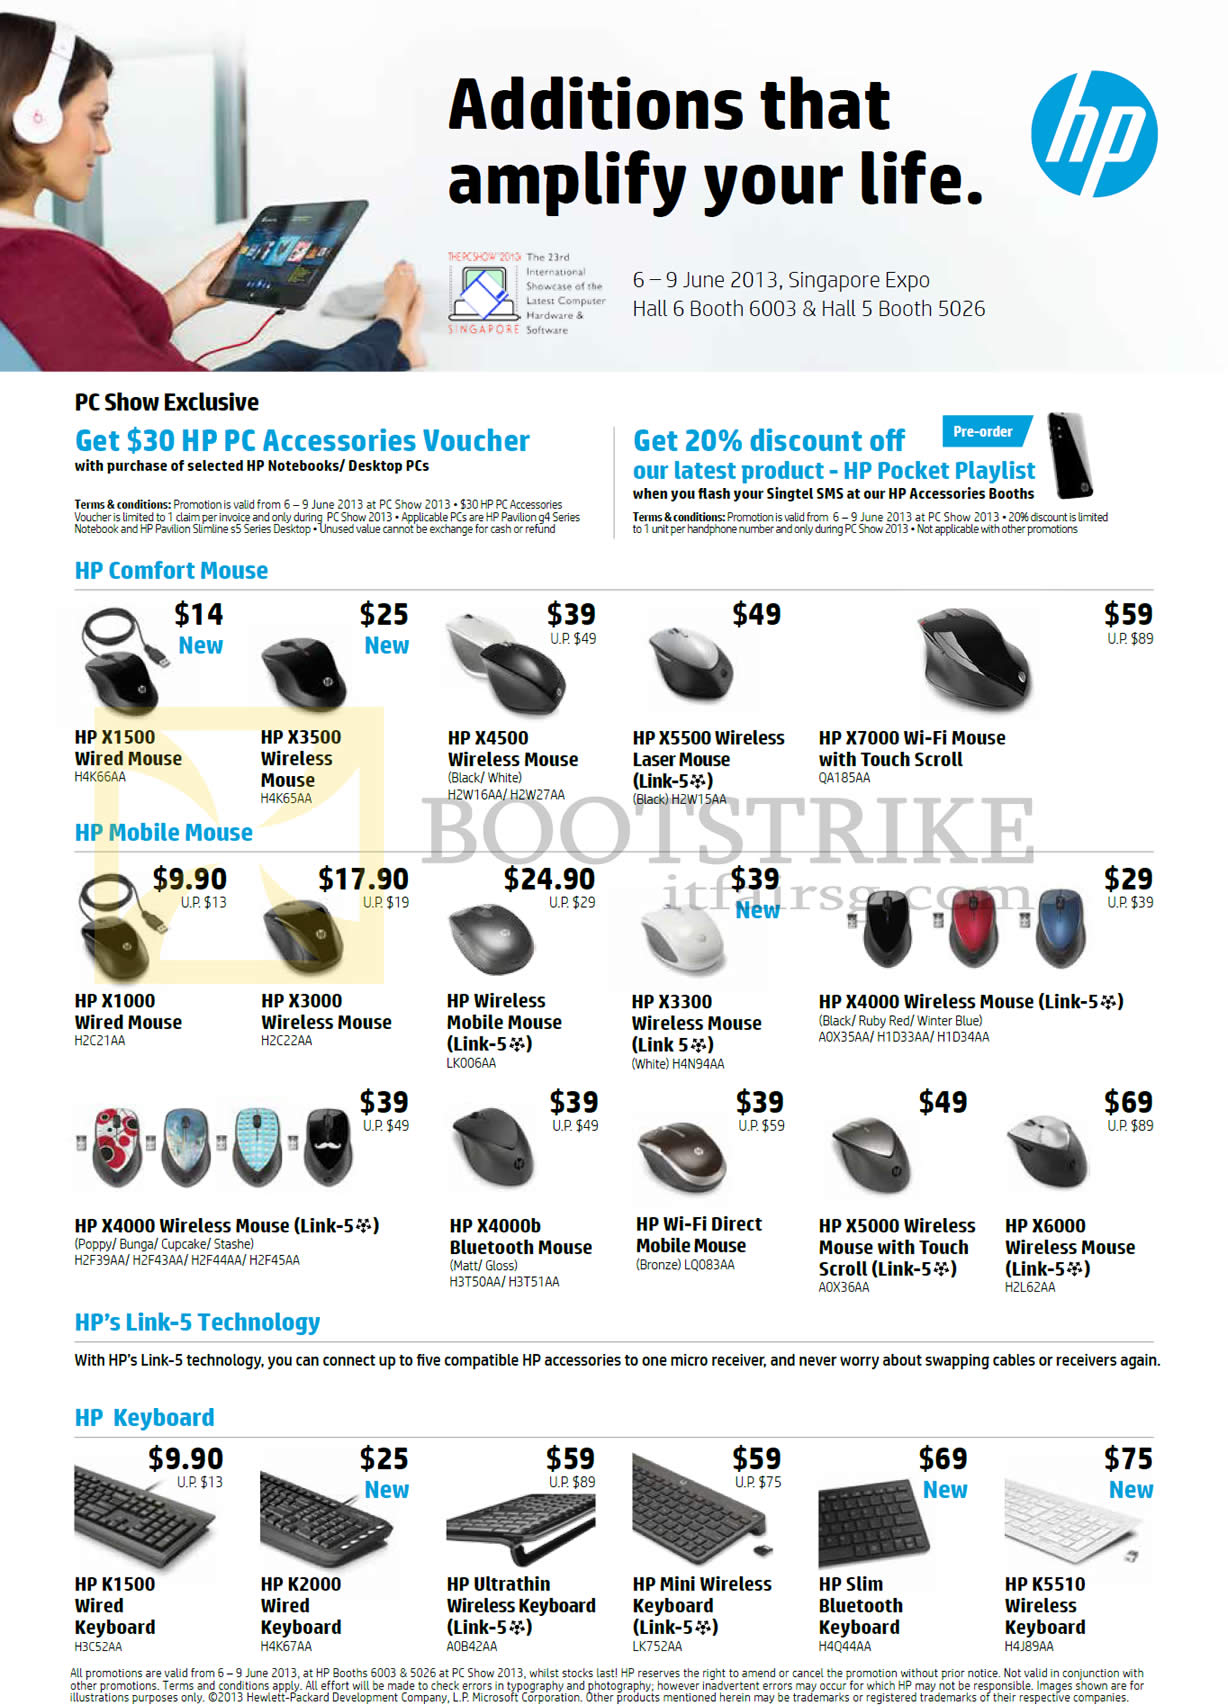 PC SHOW 2013 price list image brochure of HP Mouse X1500 X4500 X7000, Mobile X1000 X3300, Keyboard K2000, Slim, K5510 Wireless